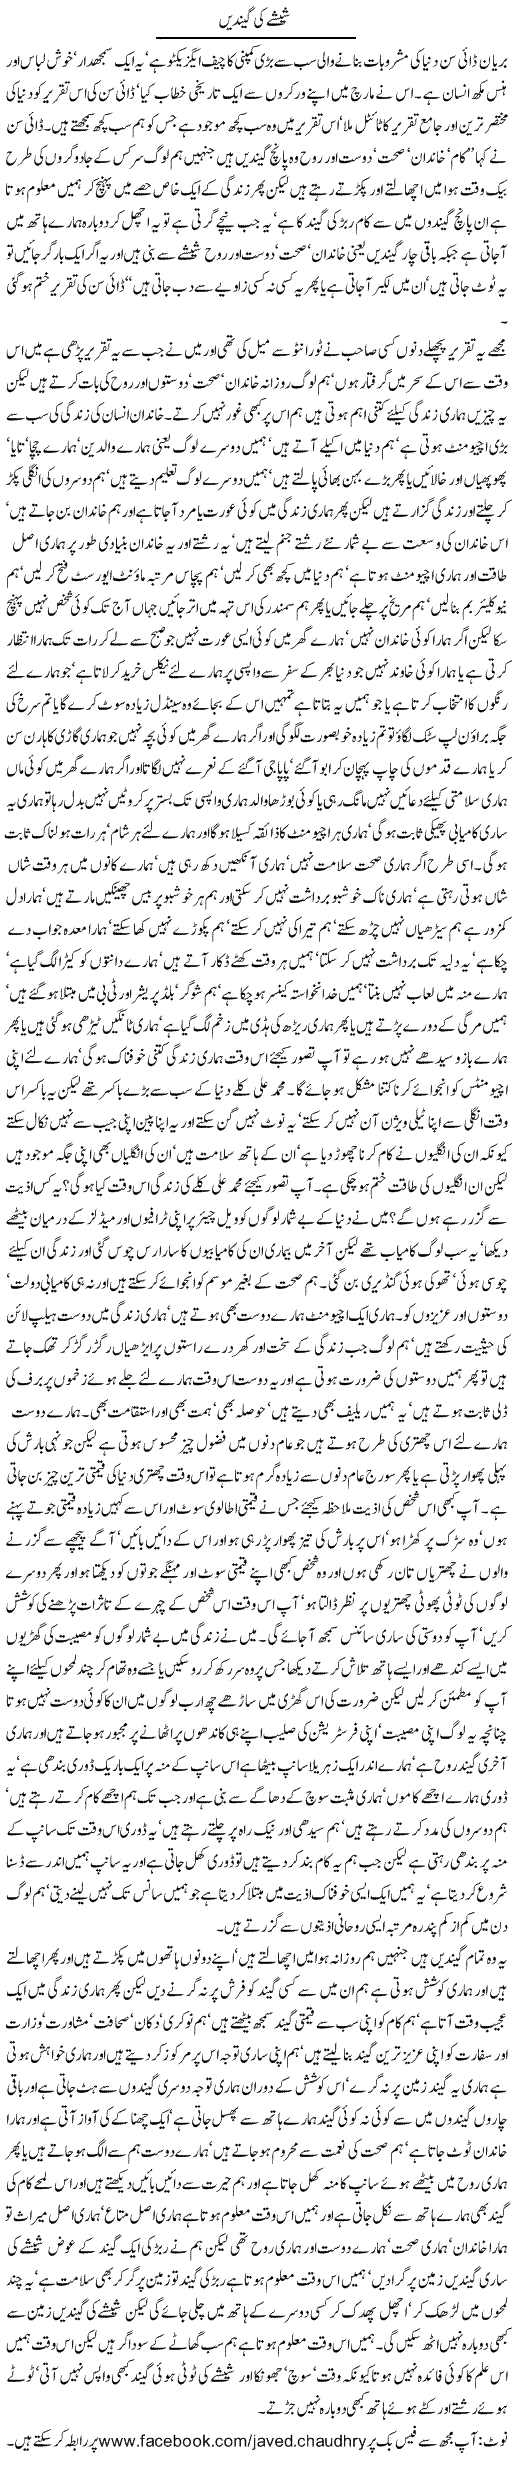 Balls of Mirror Express Column Javed Chaudhry 31 October 2010